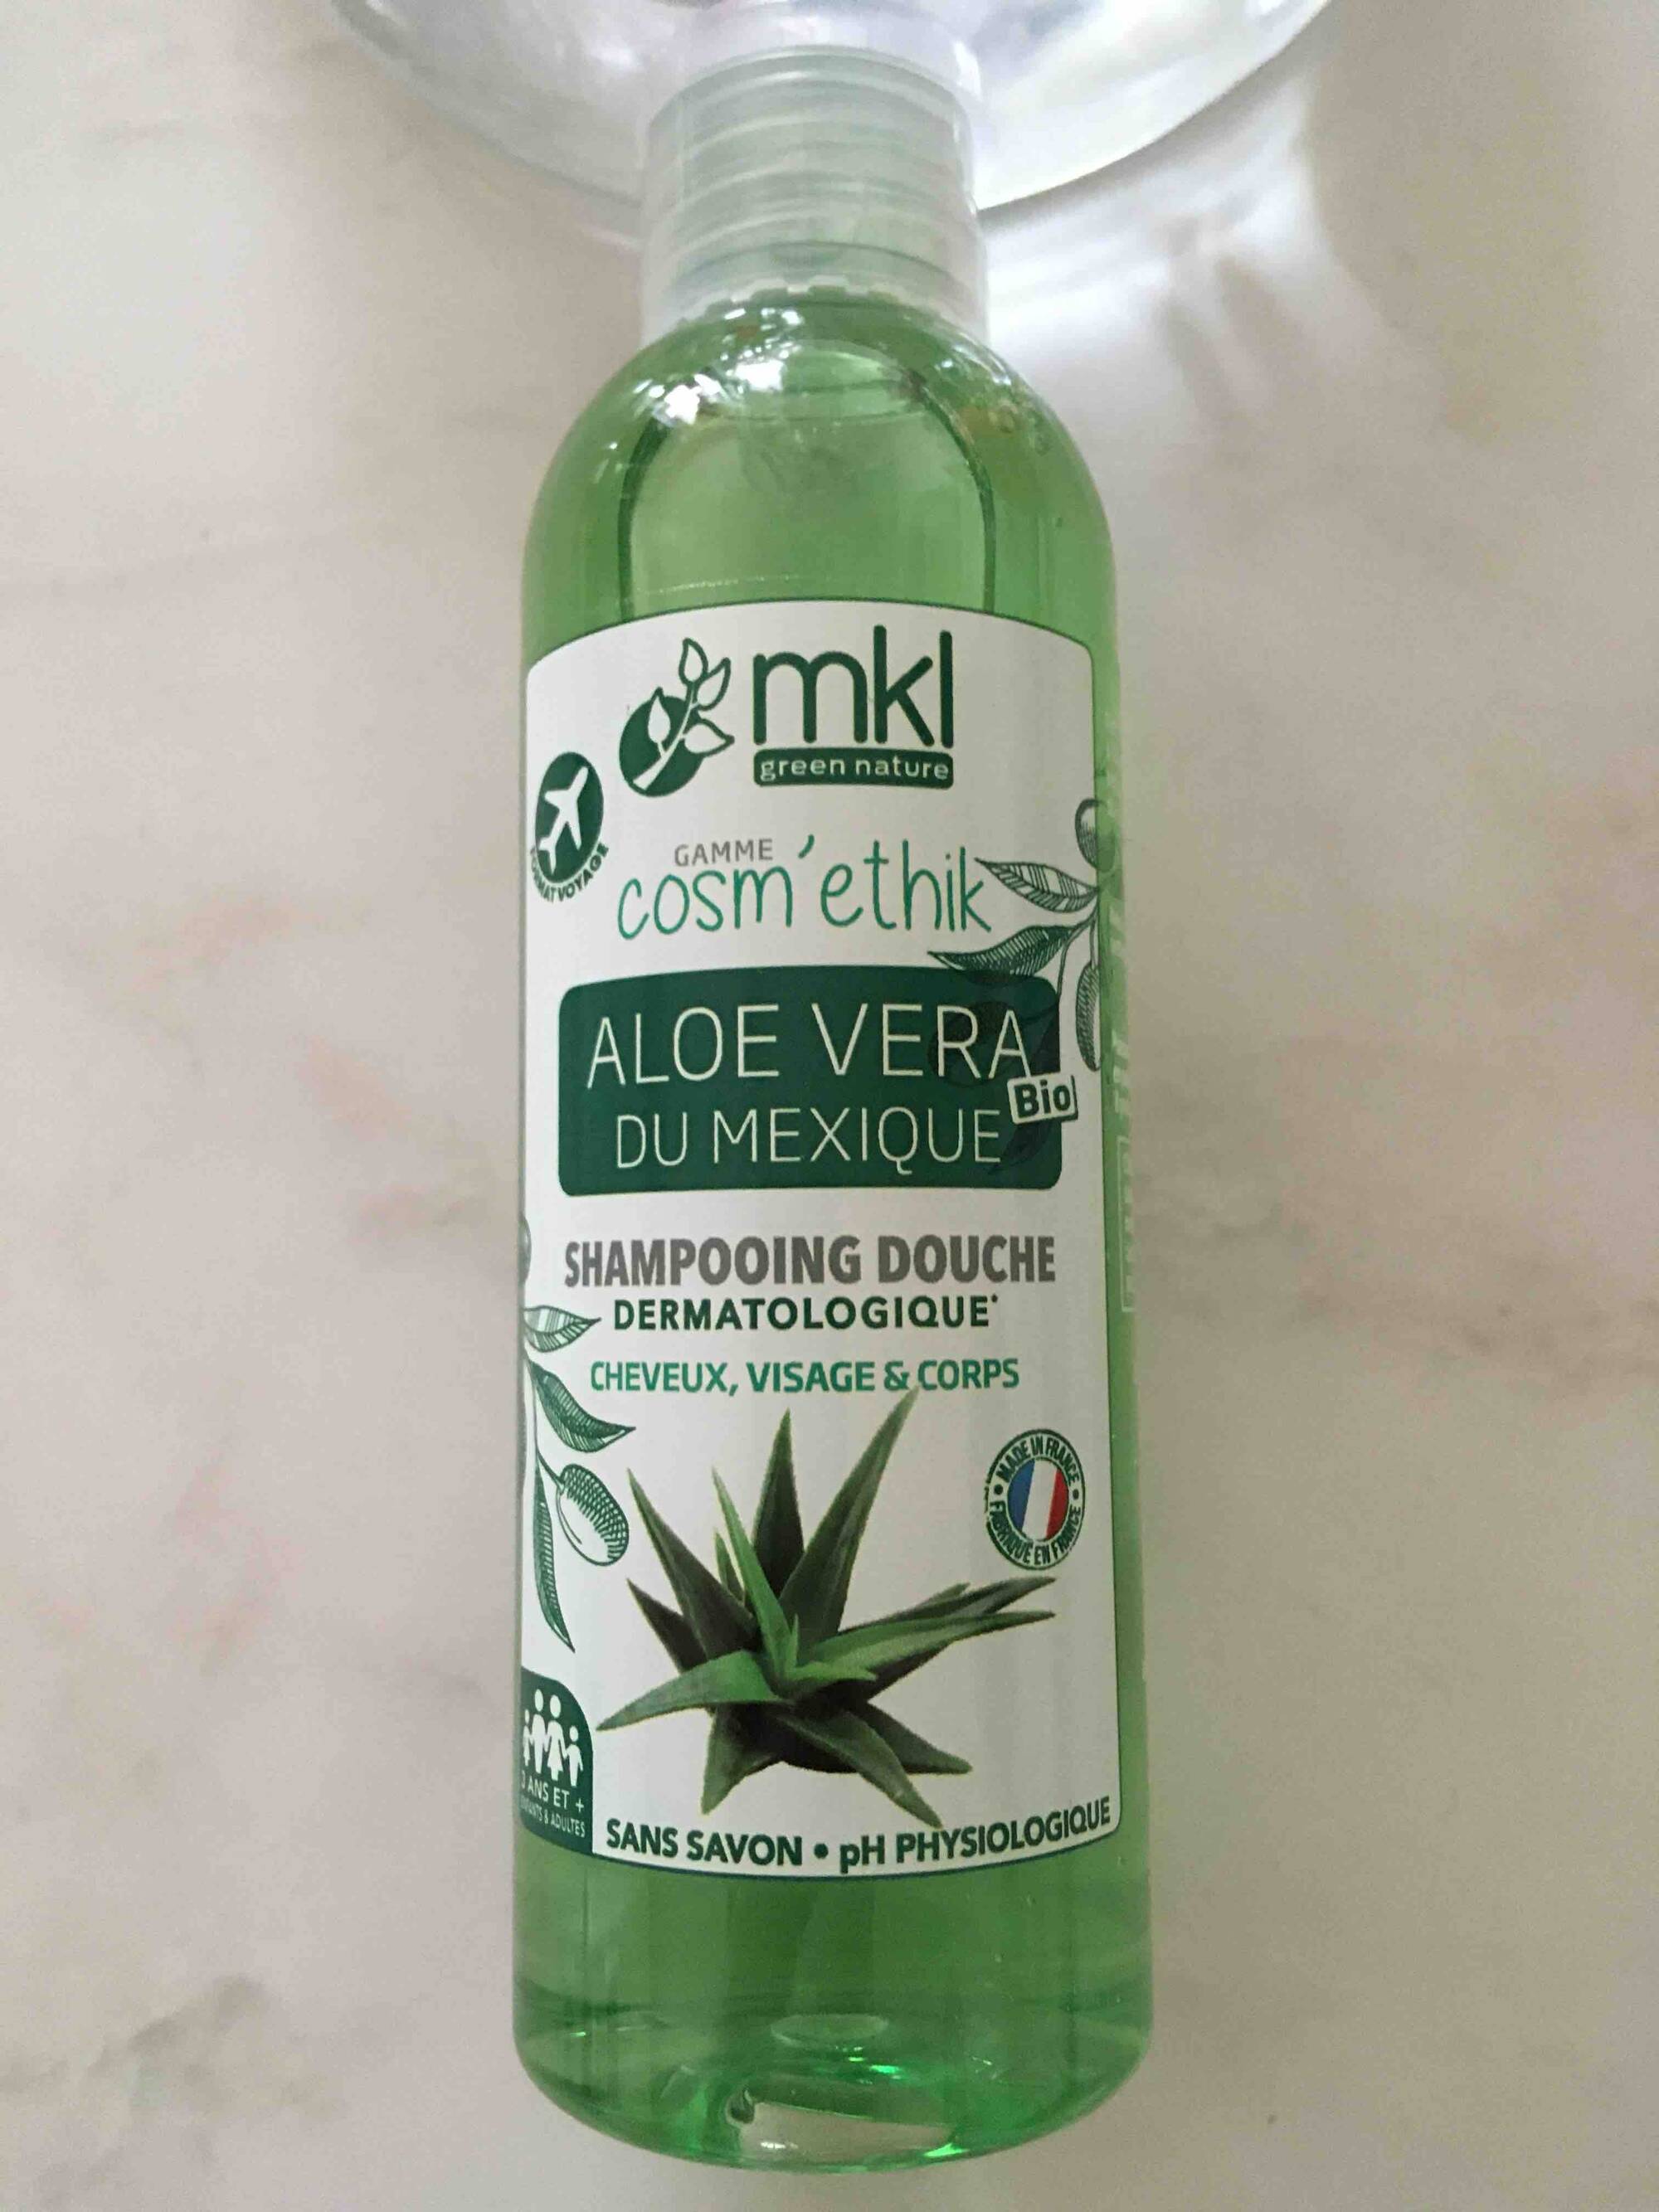 MKL GREEN NATURE - Cosm'ethik aloe vera du mexique - Shampooing douche